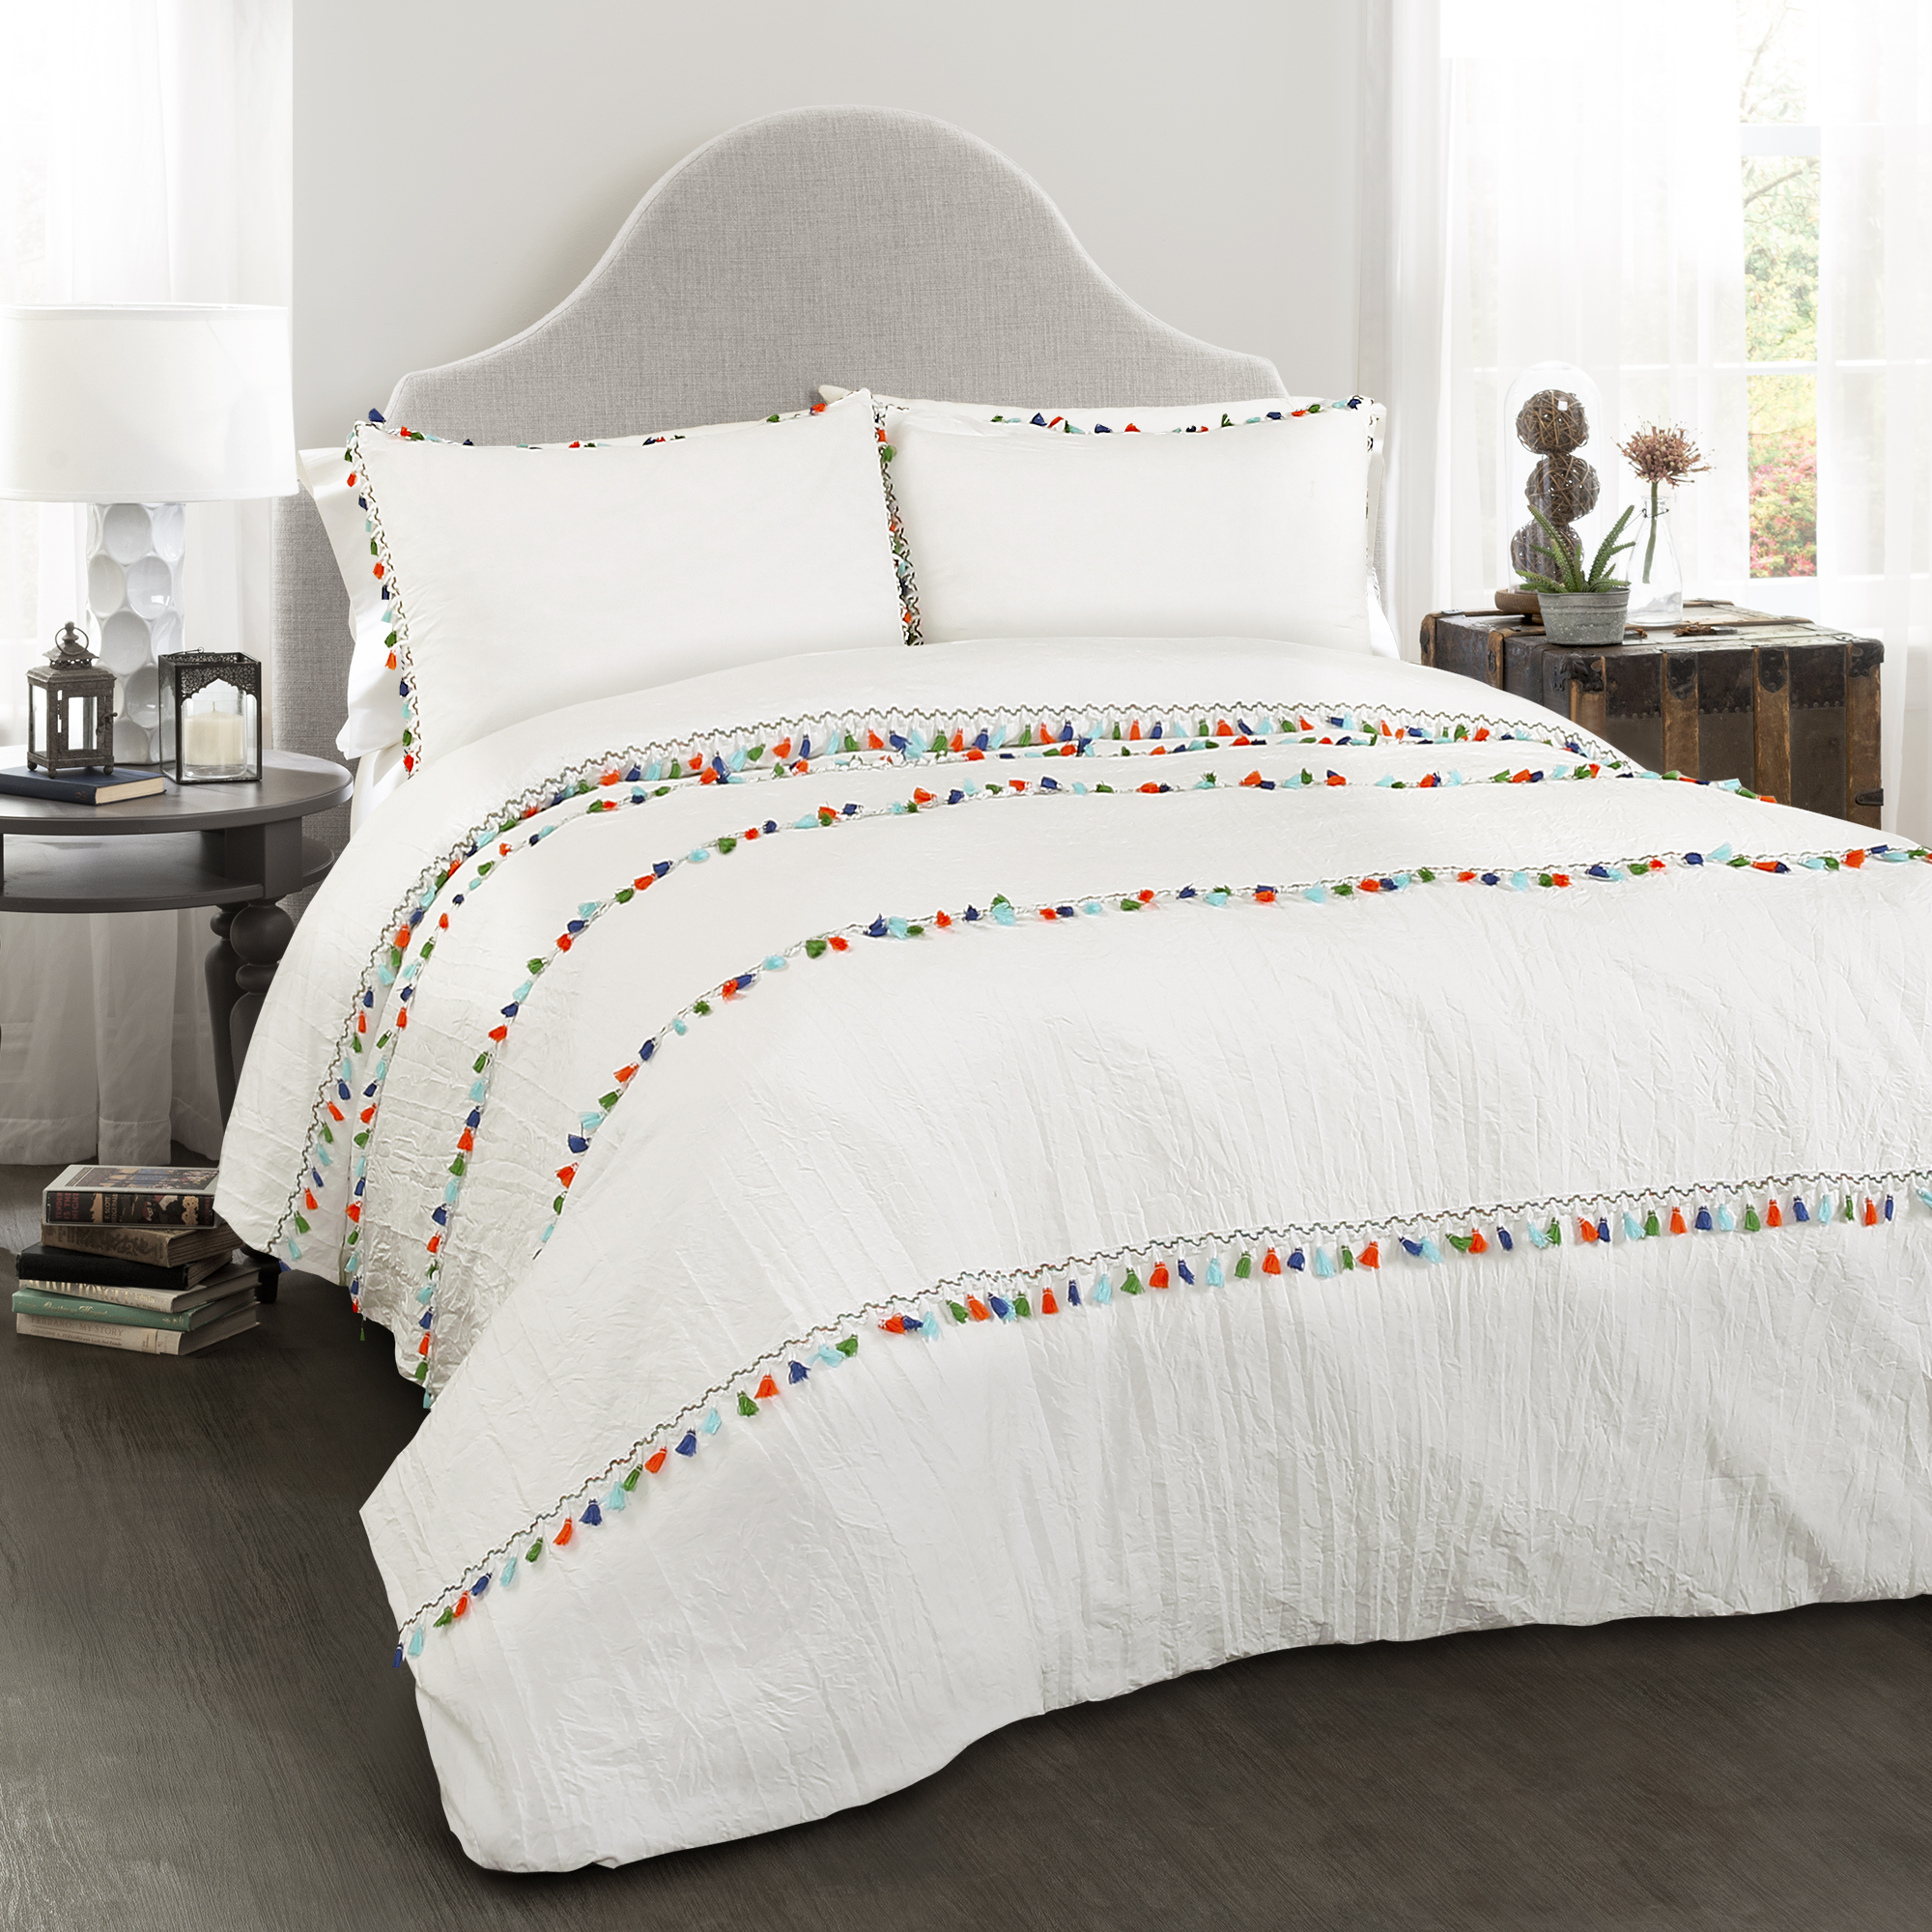 Lush Decor White Boho Tassel Comforter 3 Piece Bohemian Style Bedding Set with Pillow Shams-King